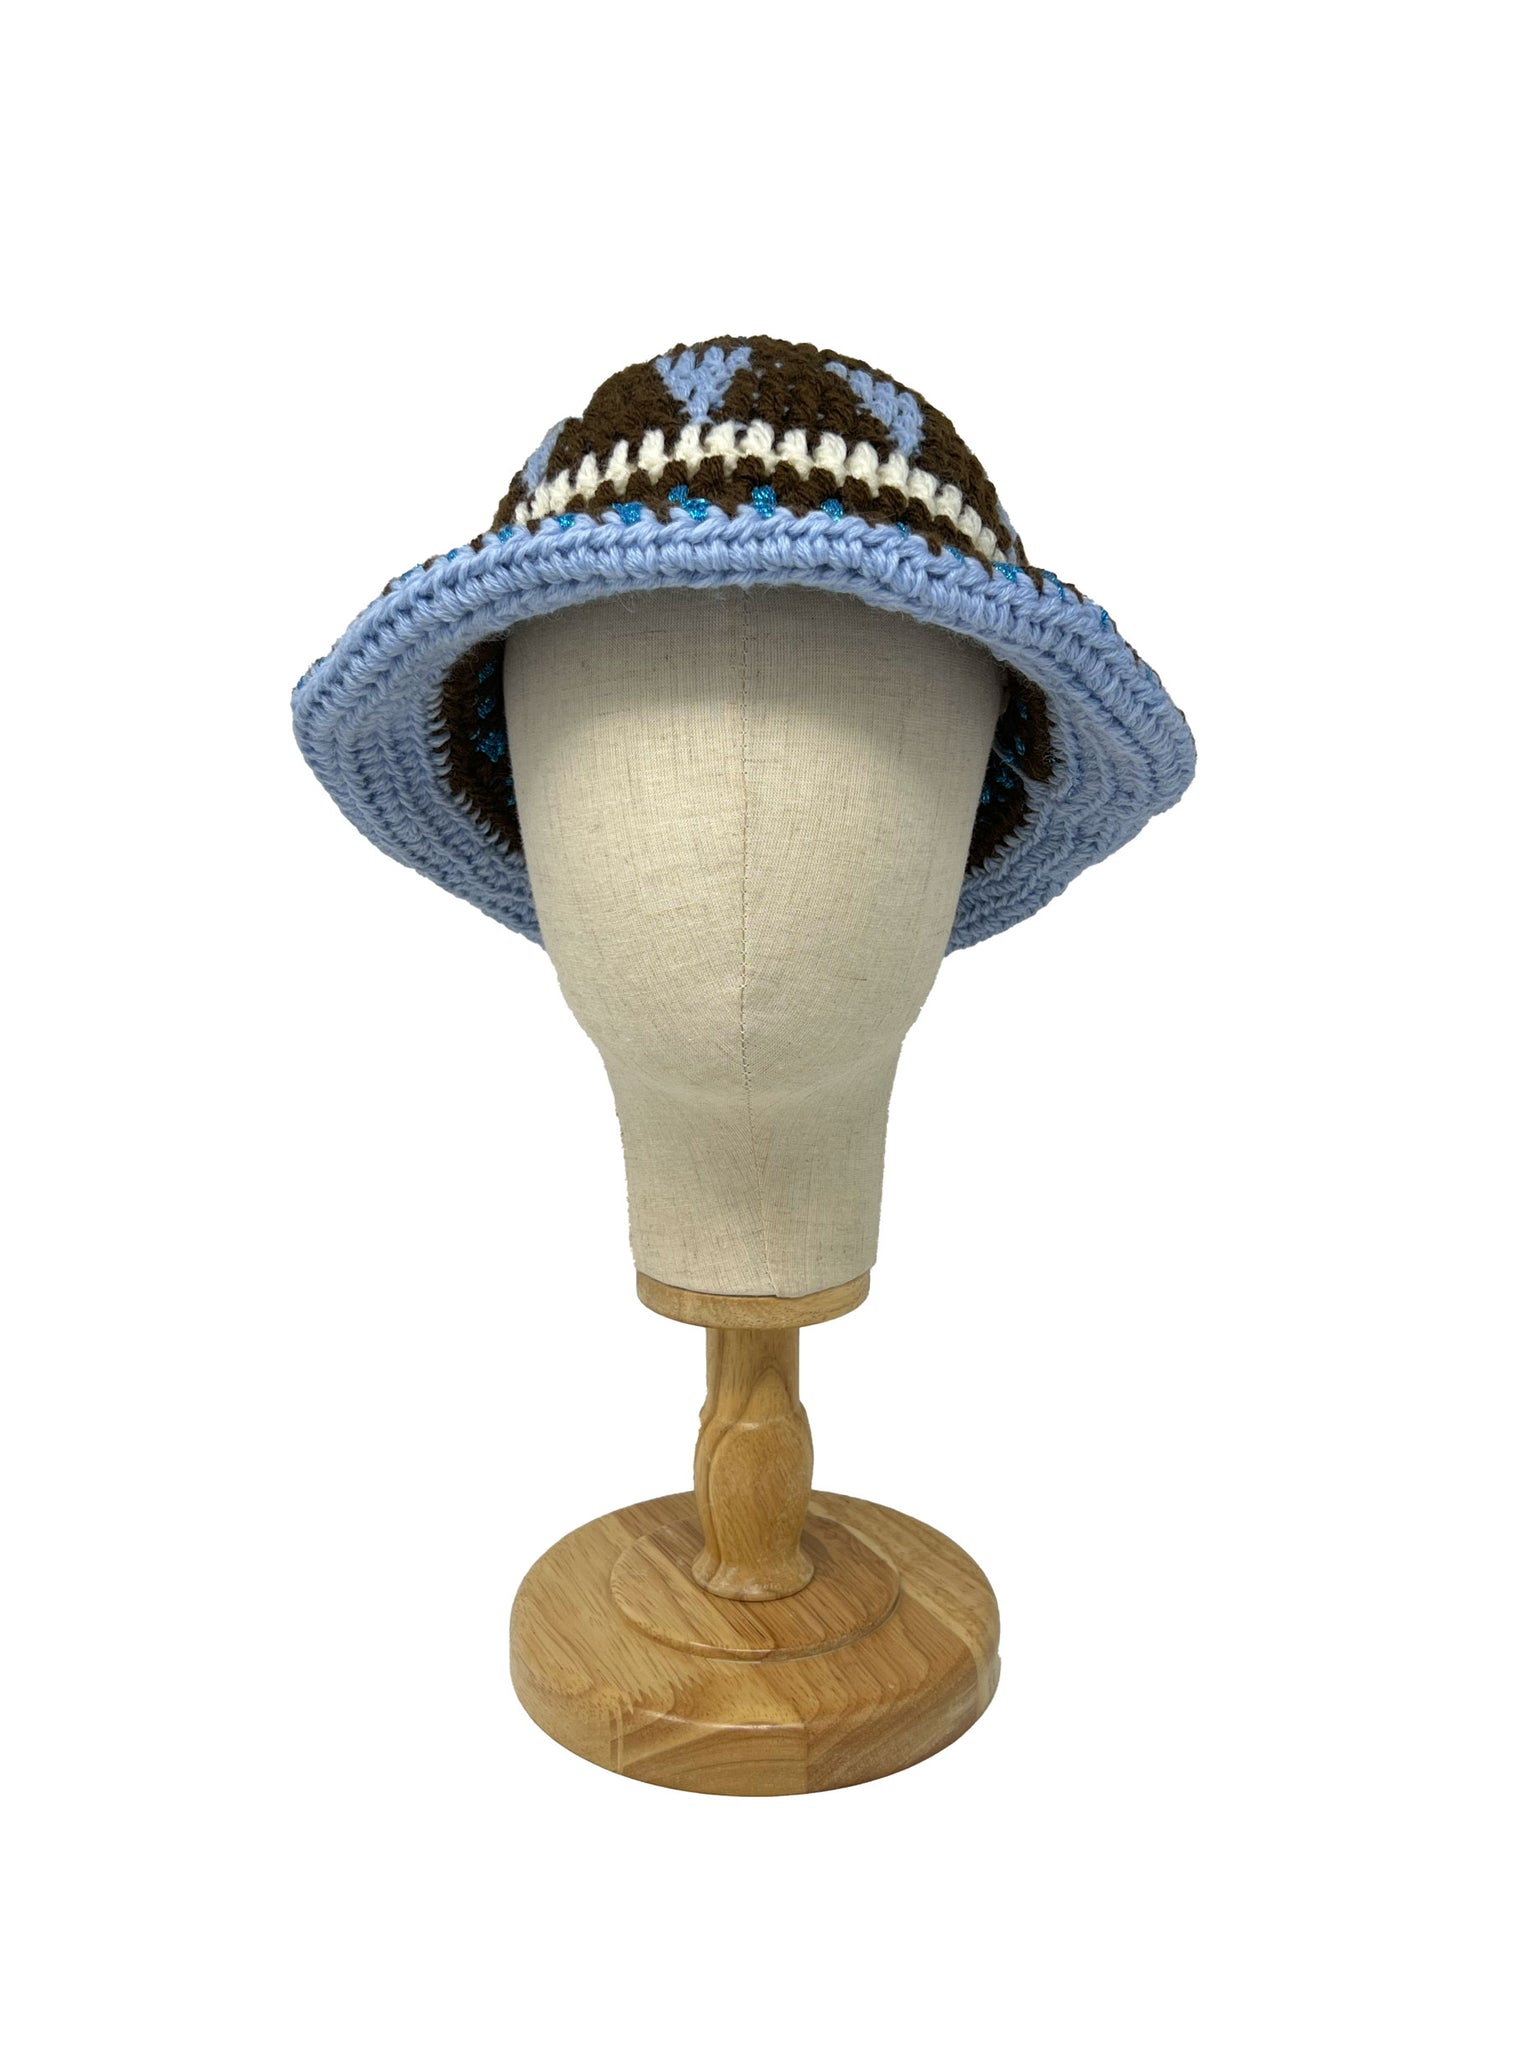 Brown and Light blue ethnic wool crochet bucket hat